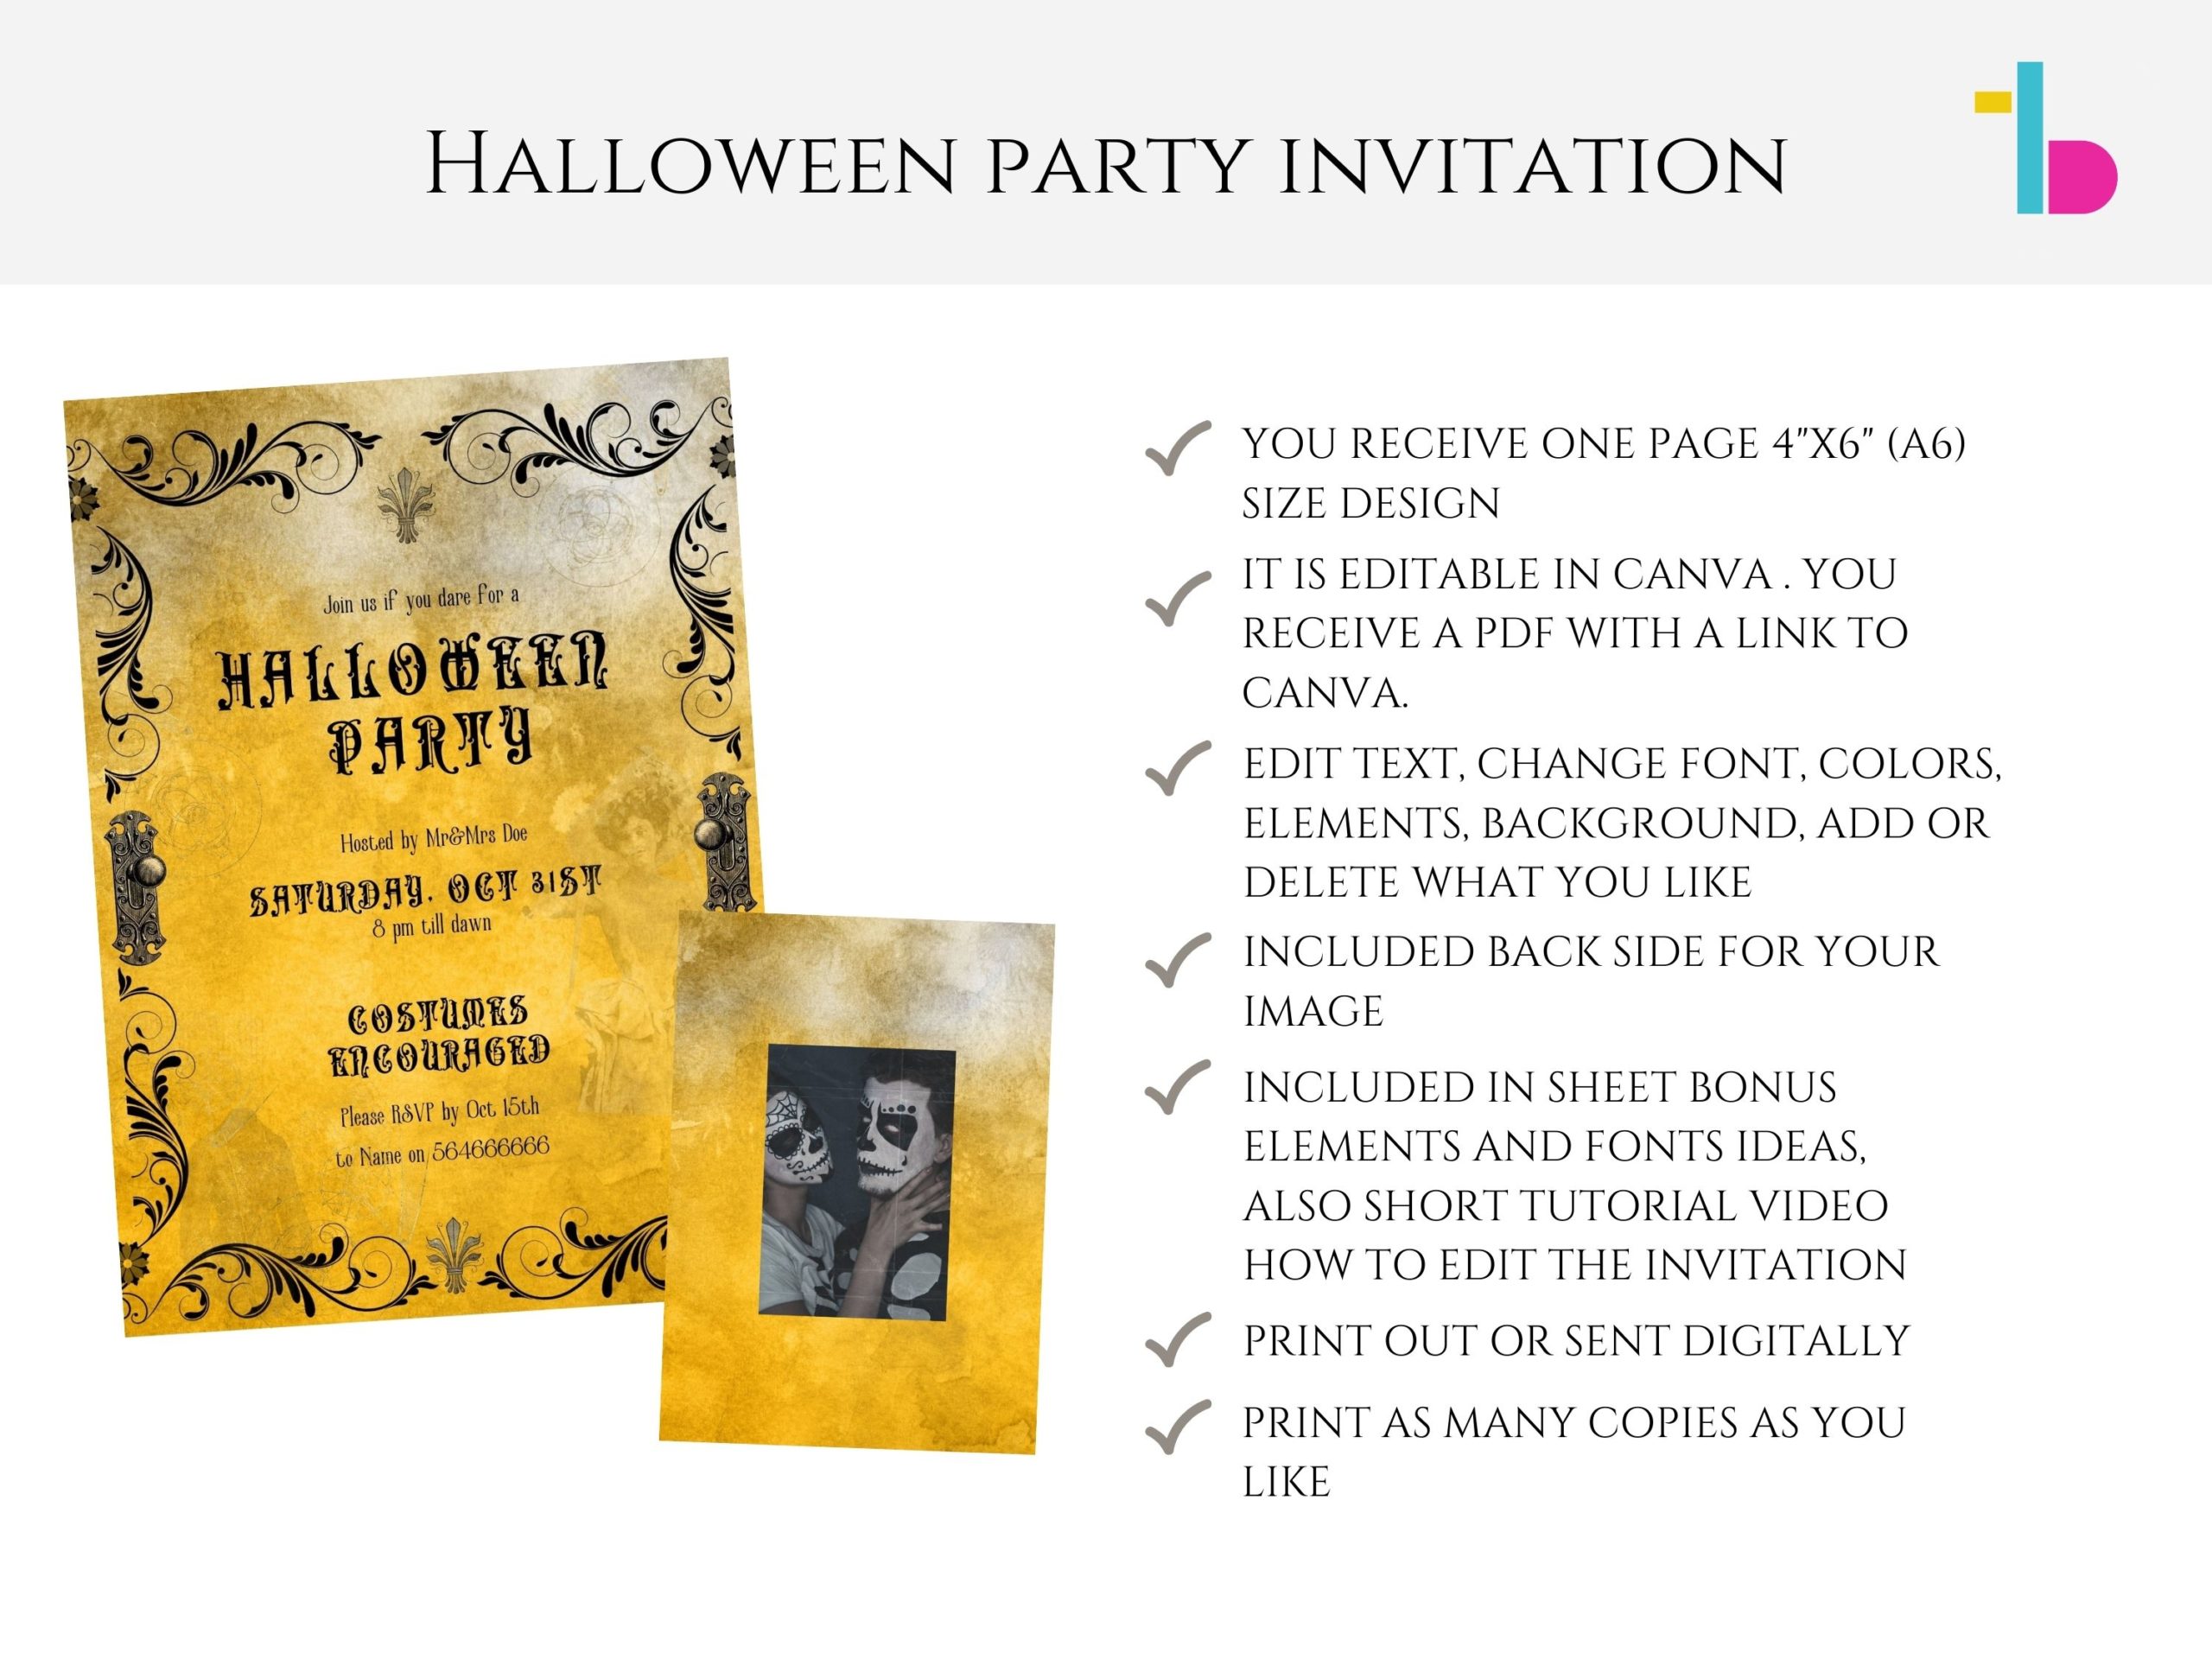 Steampunk editable party invitation card